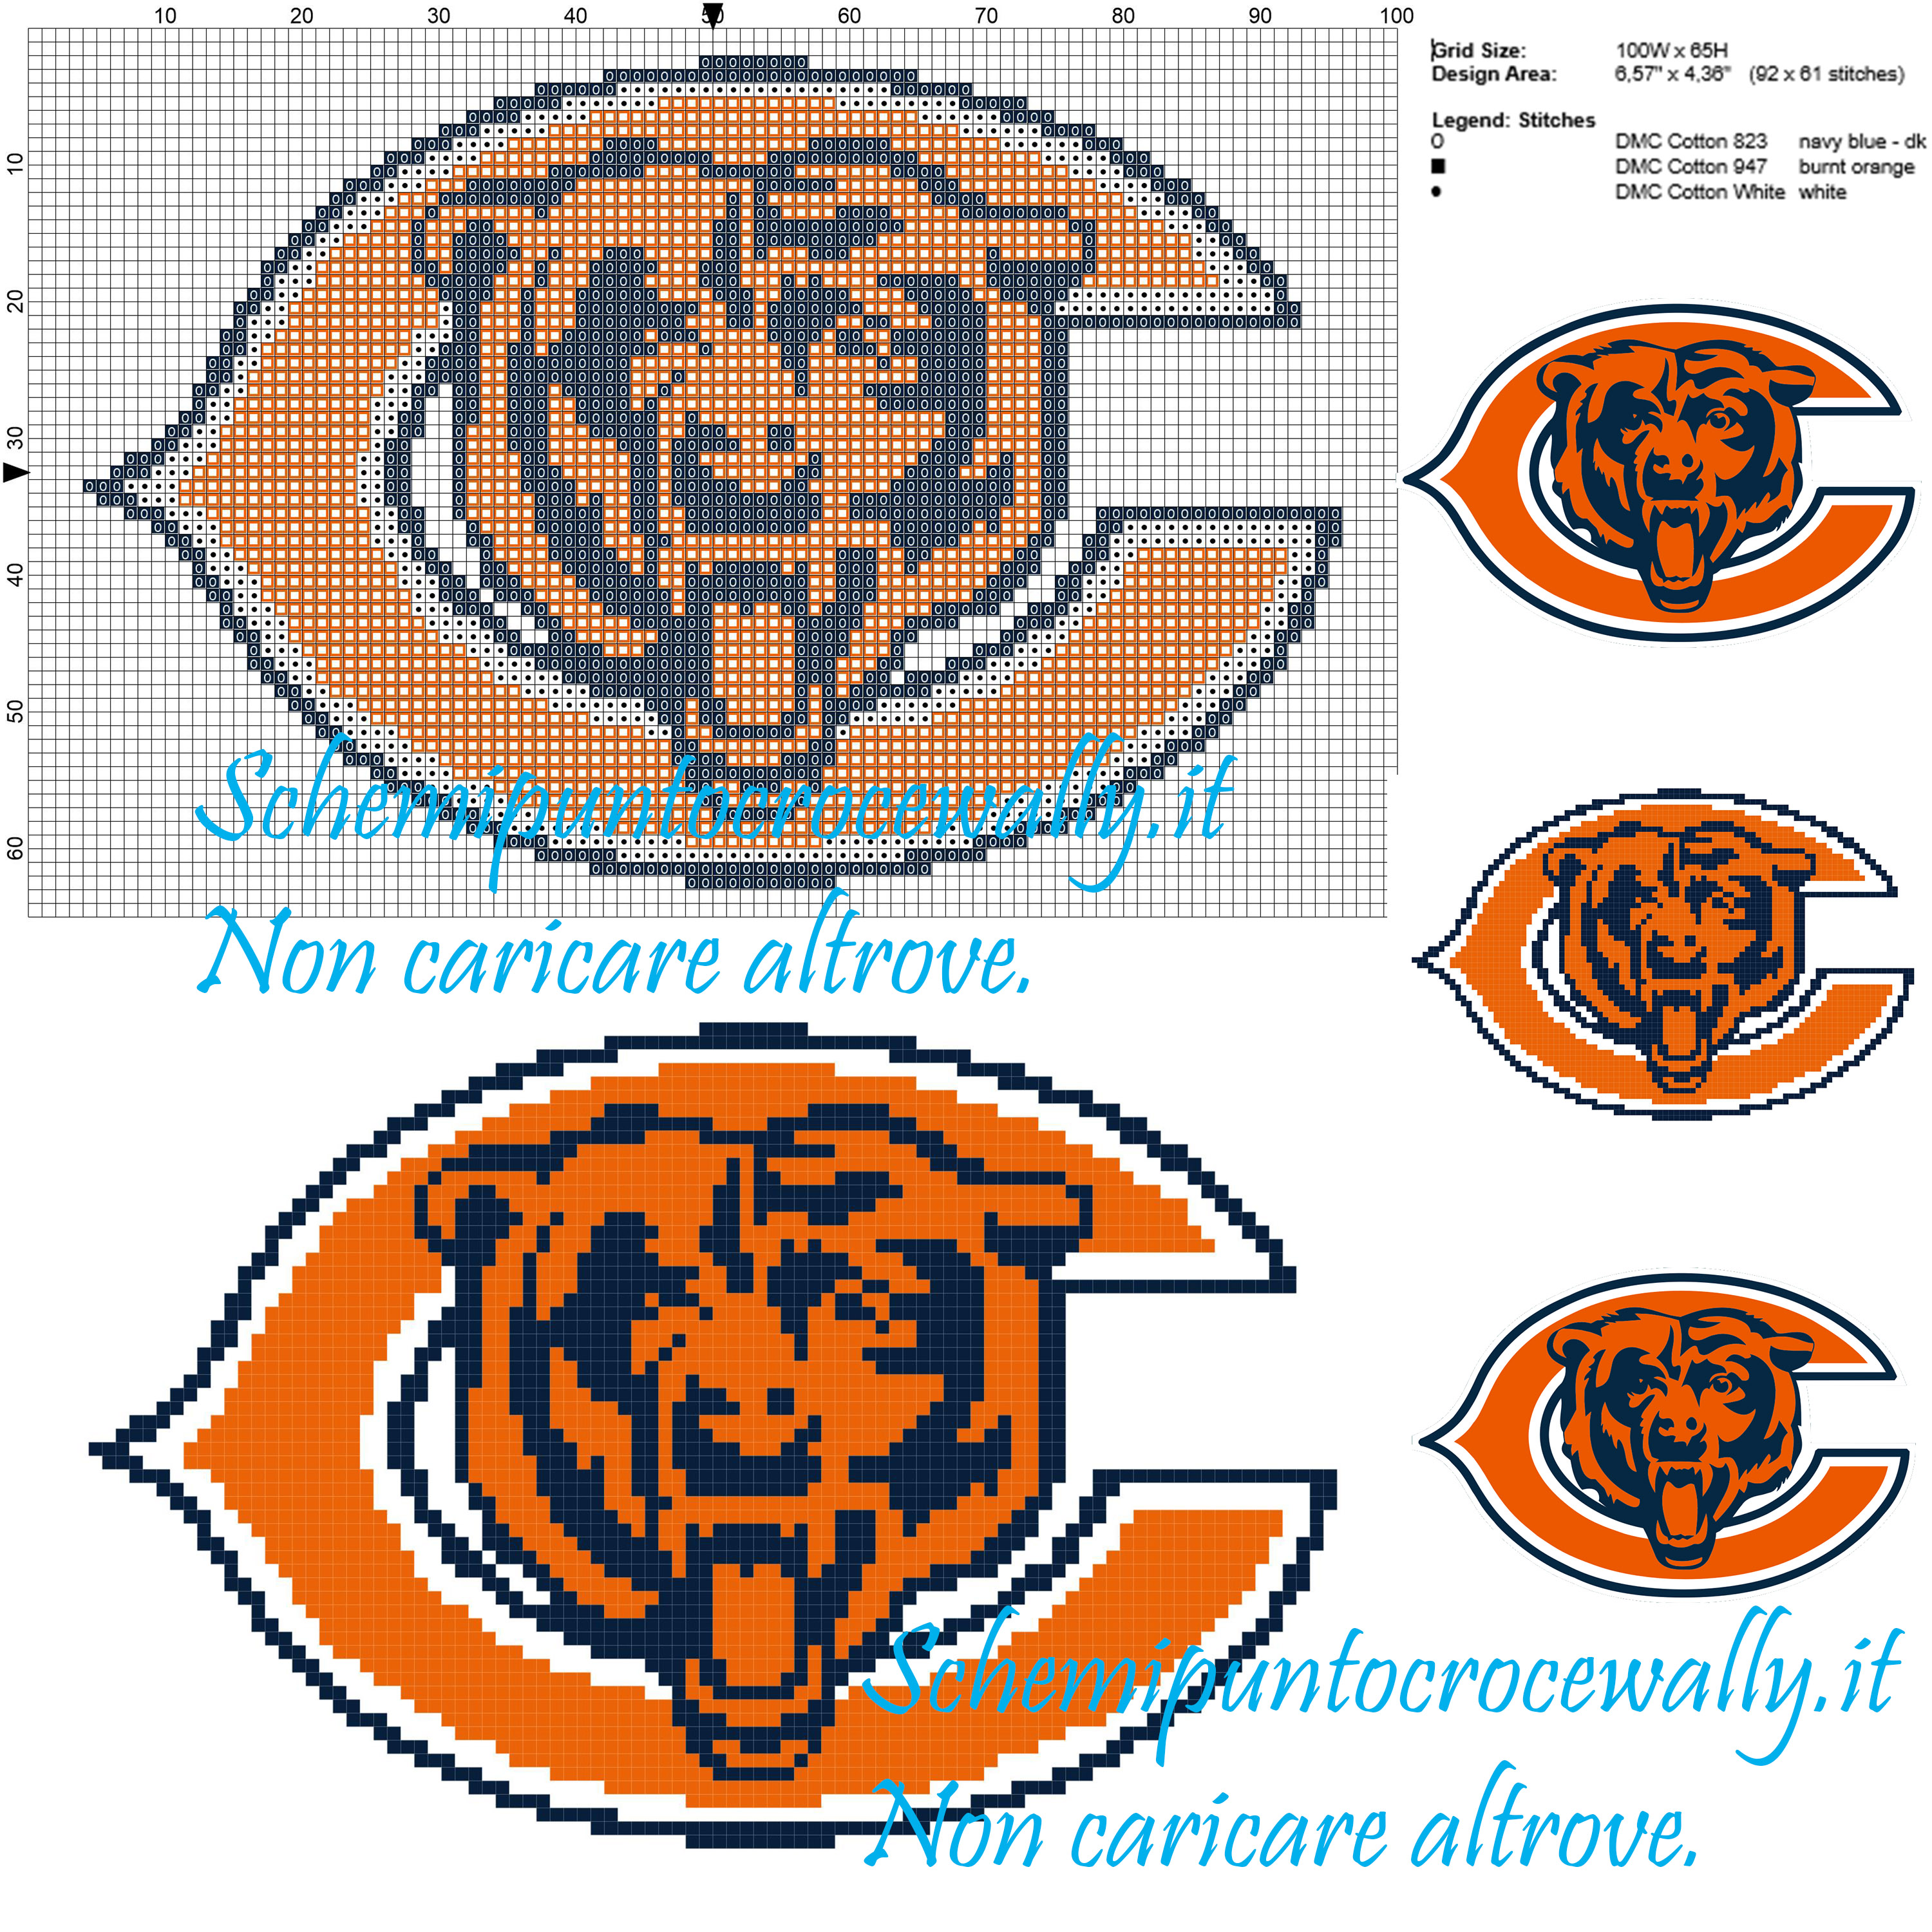 Chicago bears National football league (NFL) schema punto croce 100x65 3 colori